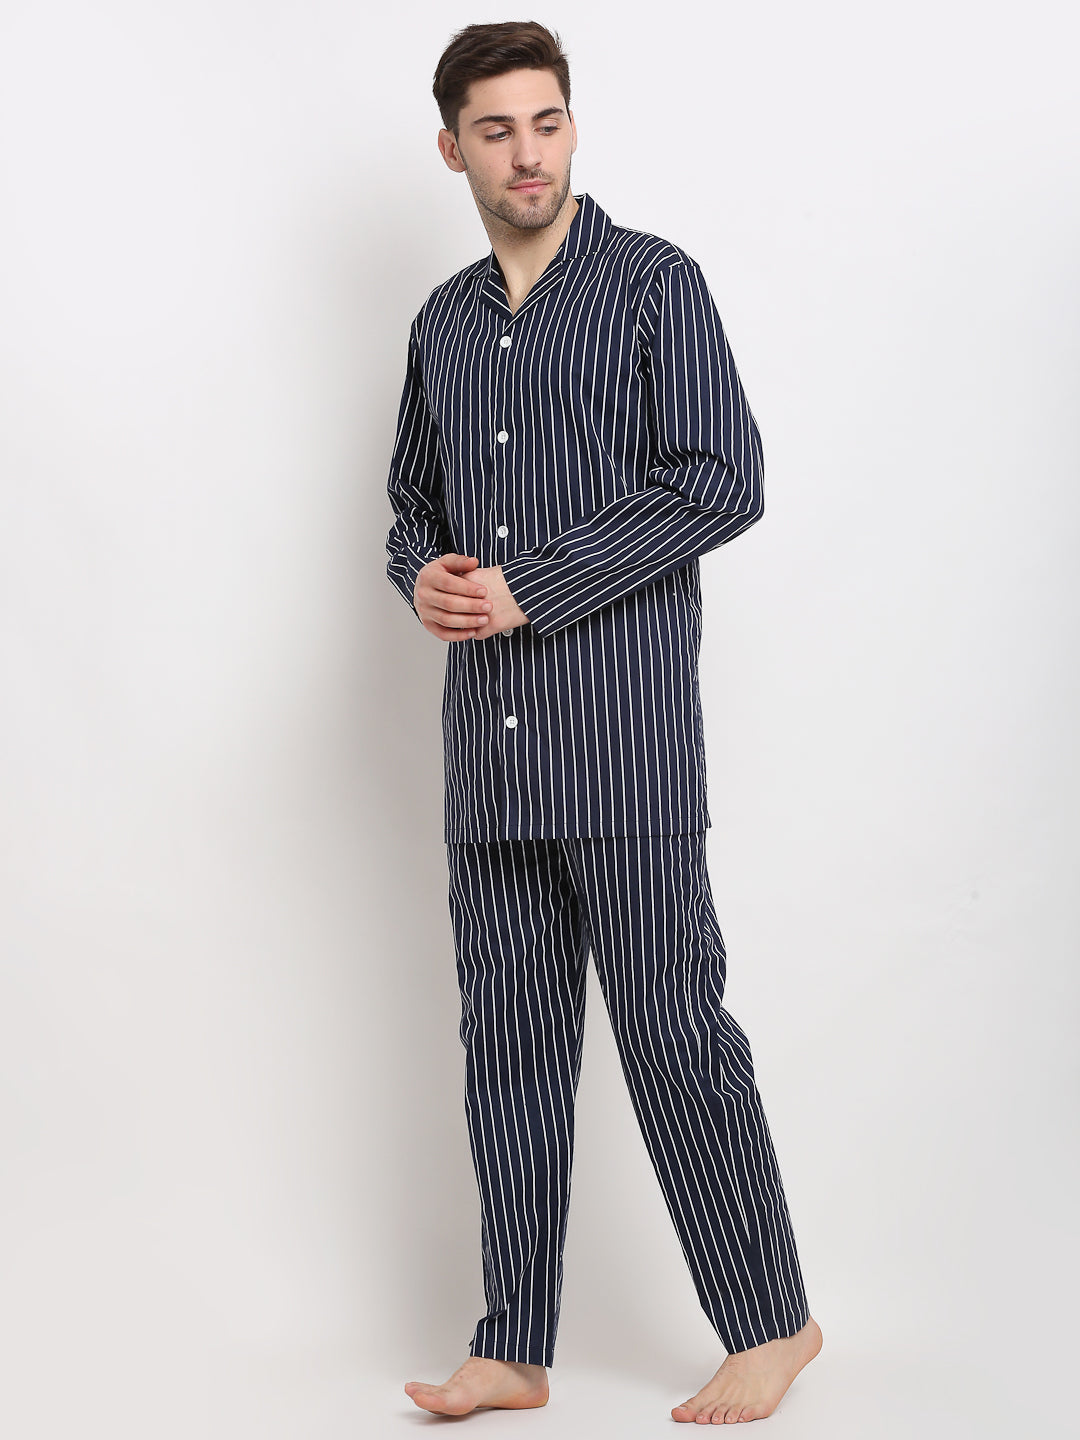 Men's Navy Cotton Striped Night Suits ( GNS 002Navy ) - Jainish